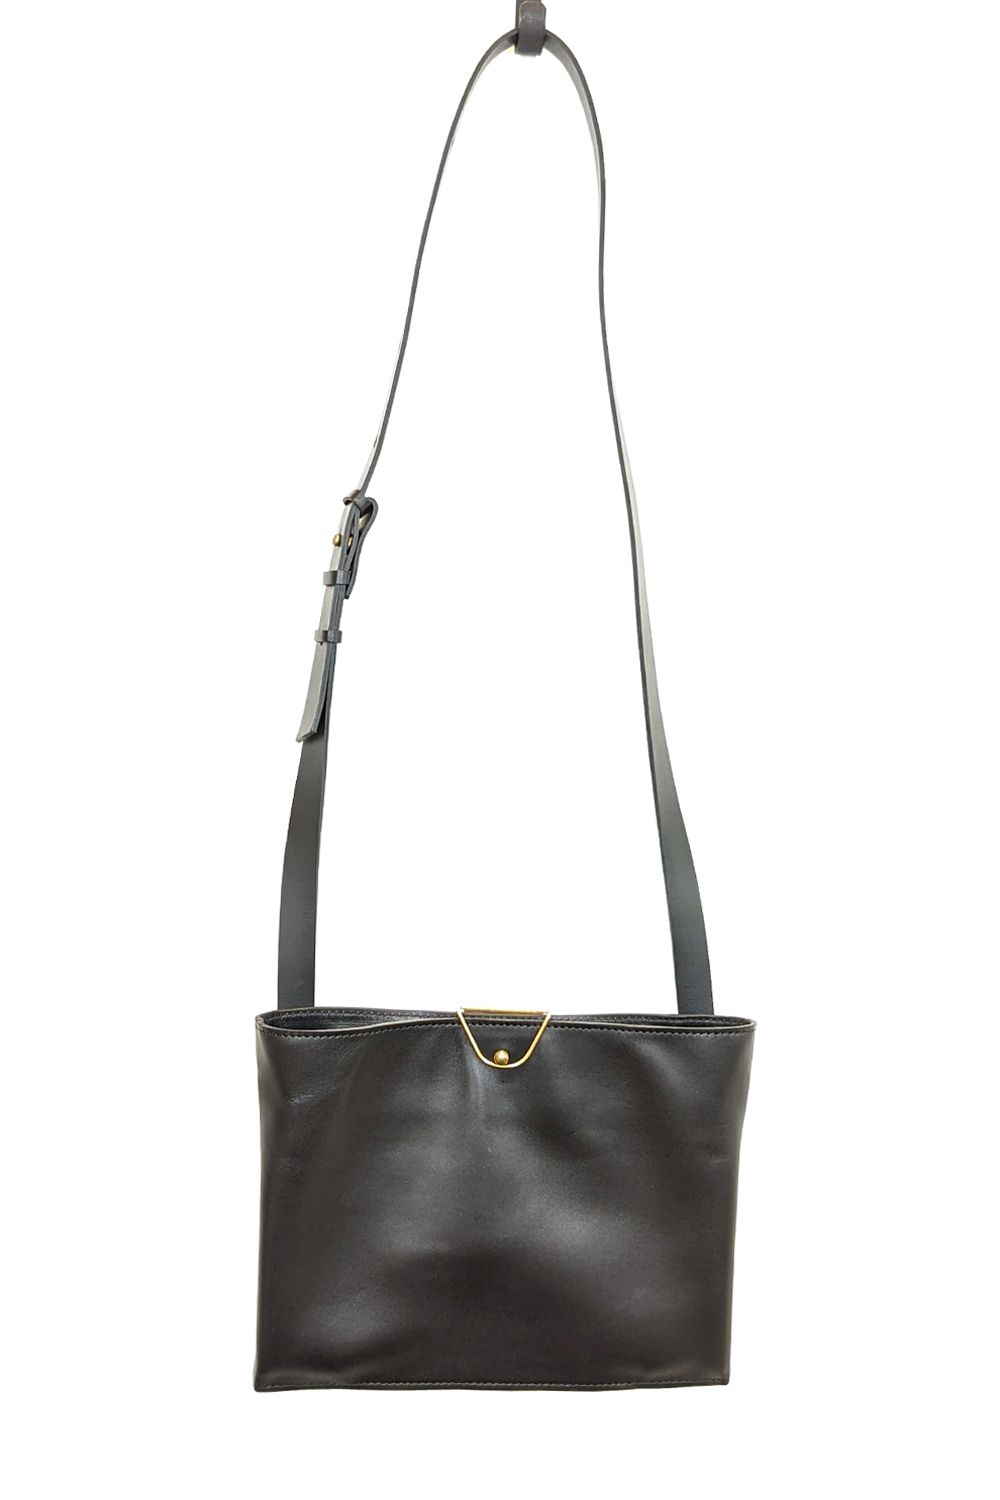 ke shi ki - Leather clip compact shoulder bag [Black] / レザー 